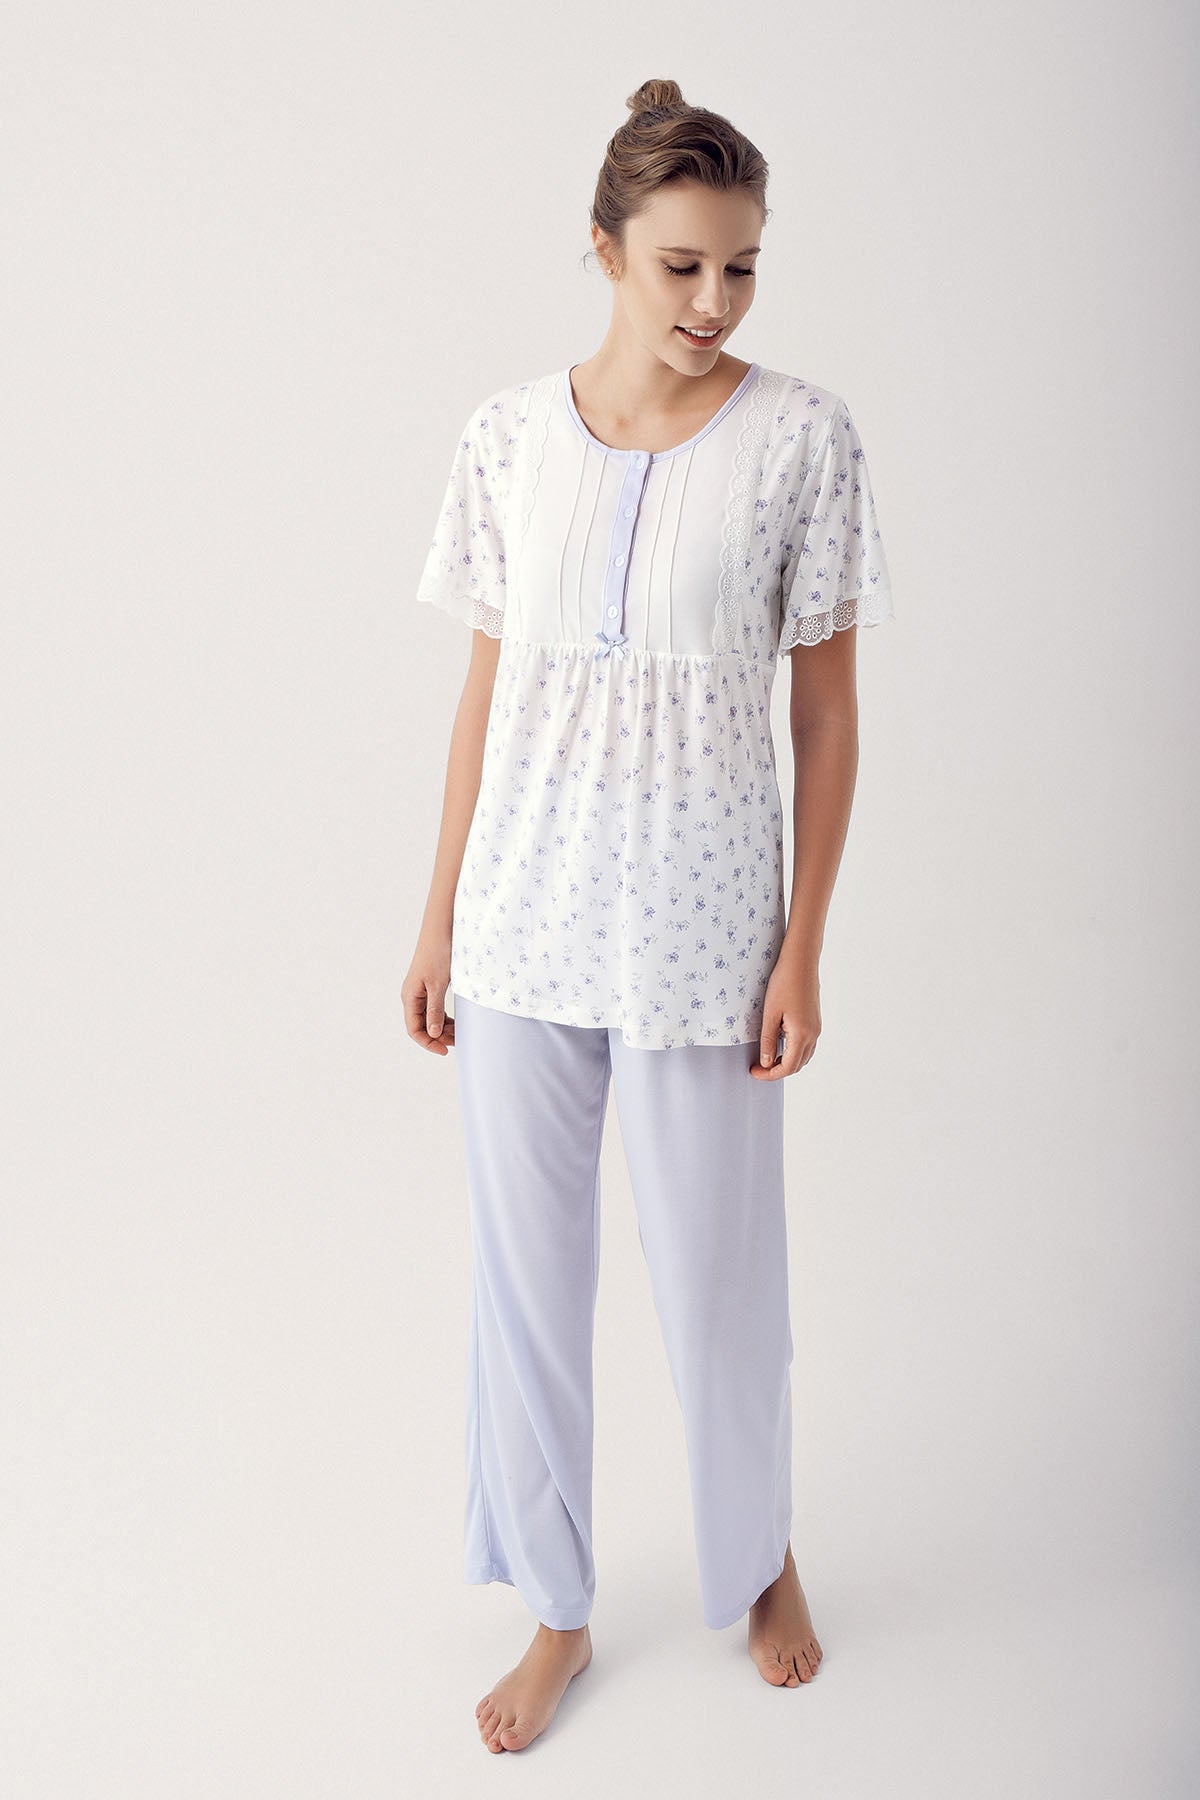 Shopymommy 14201 Flower Pattern Lace Plus Size Maternity & Nursing Pajamas Lilac